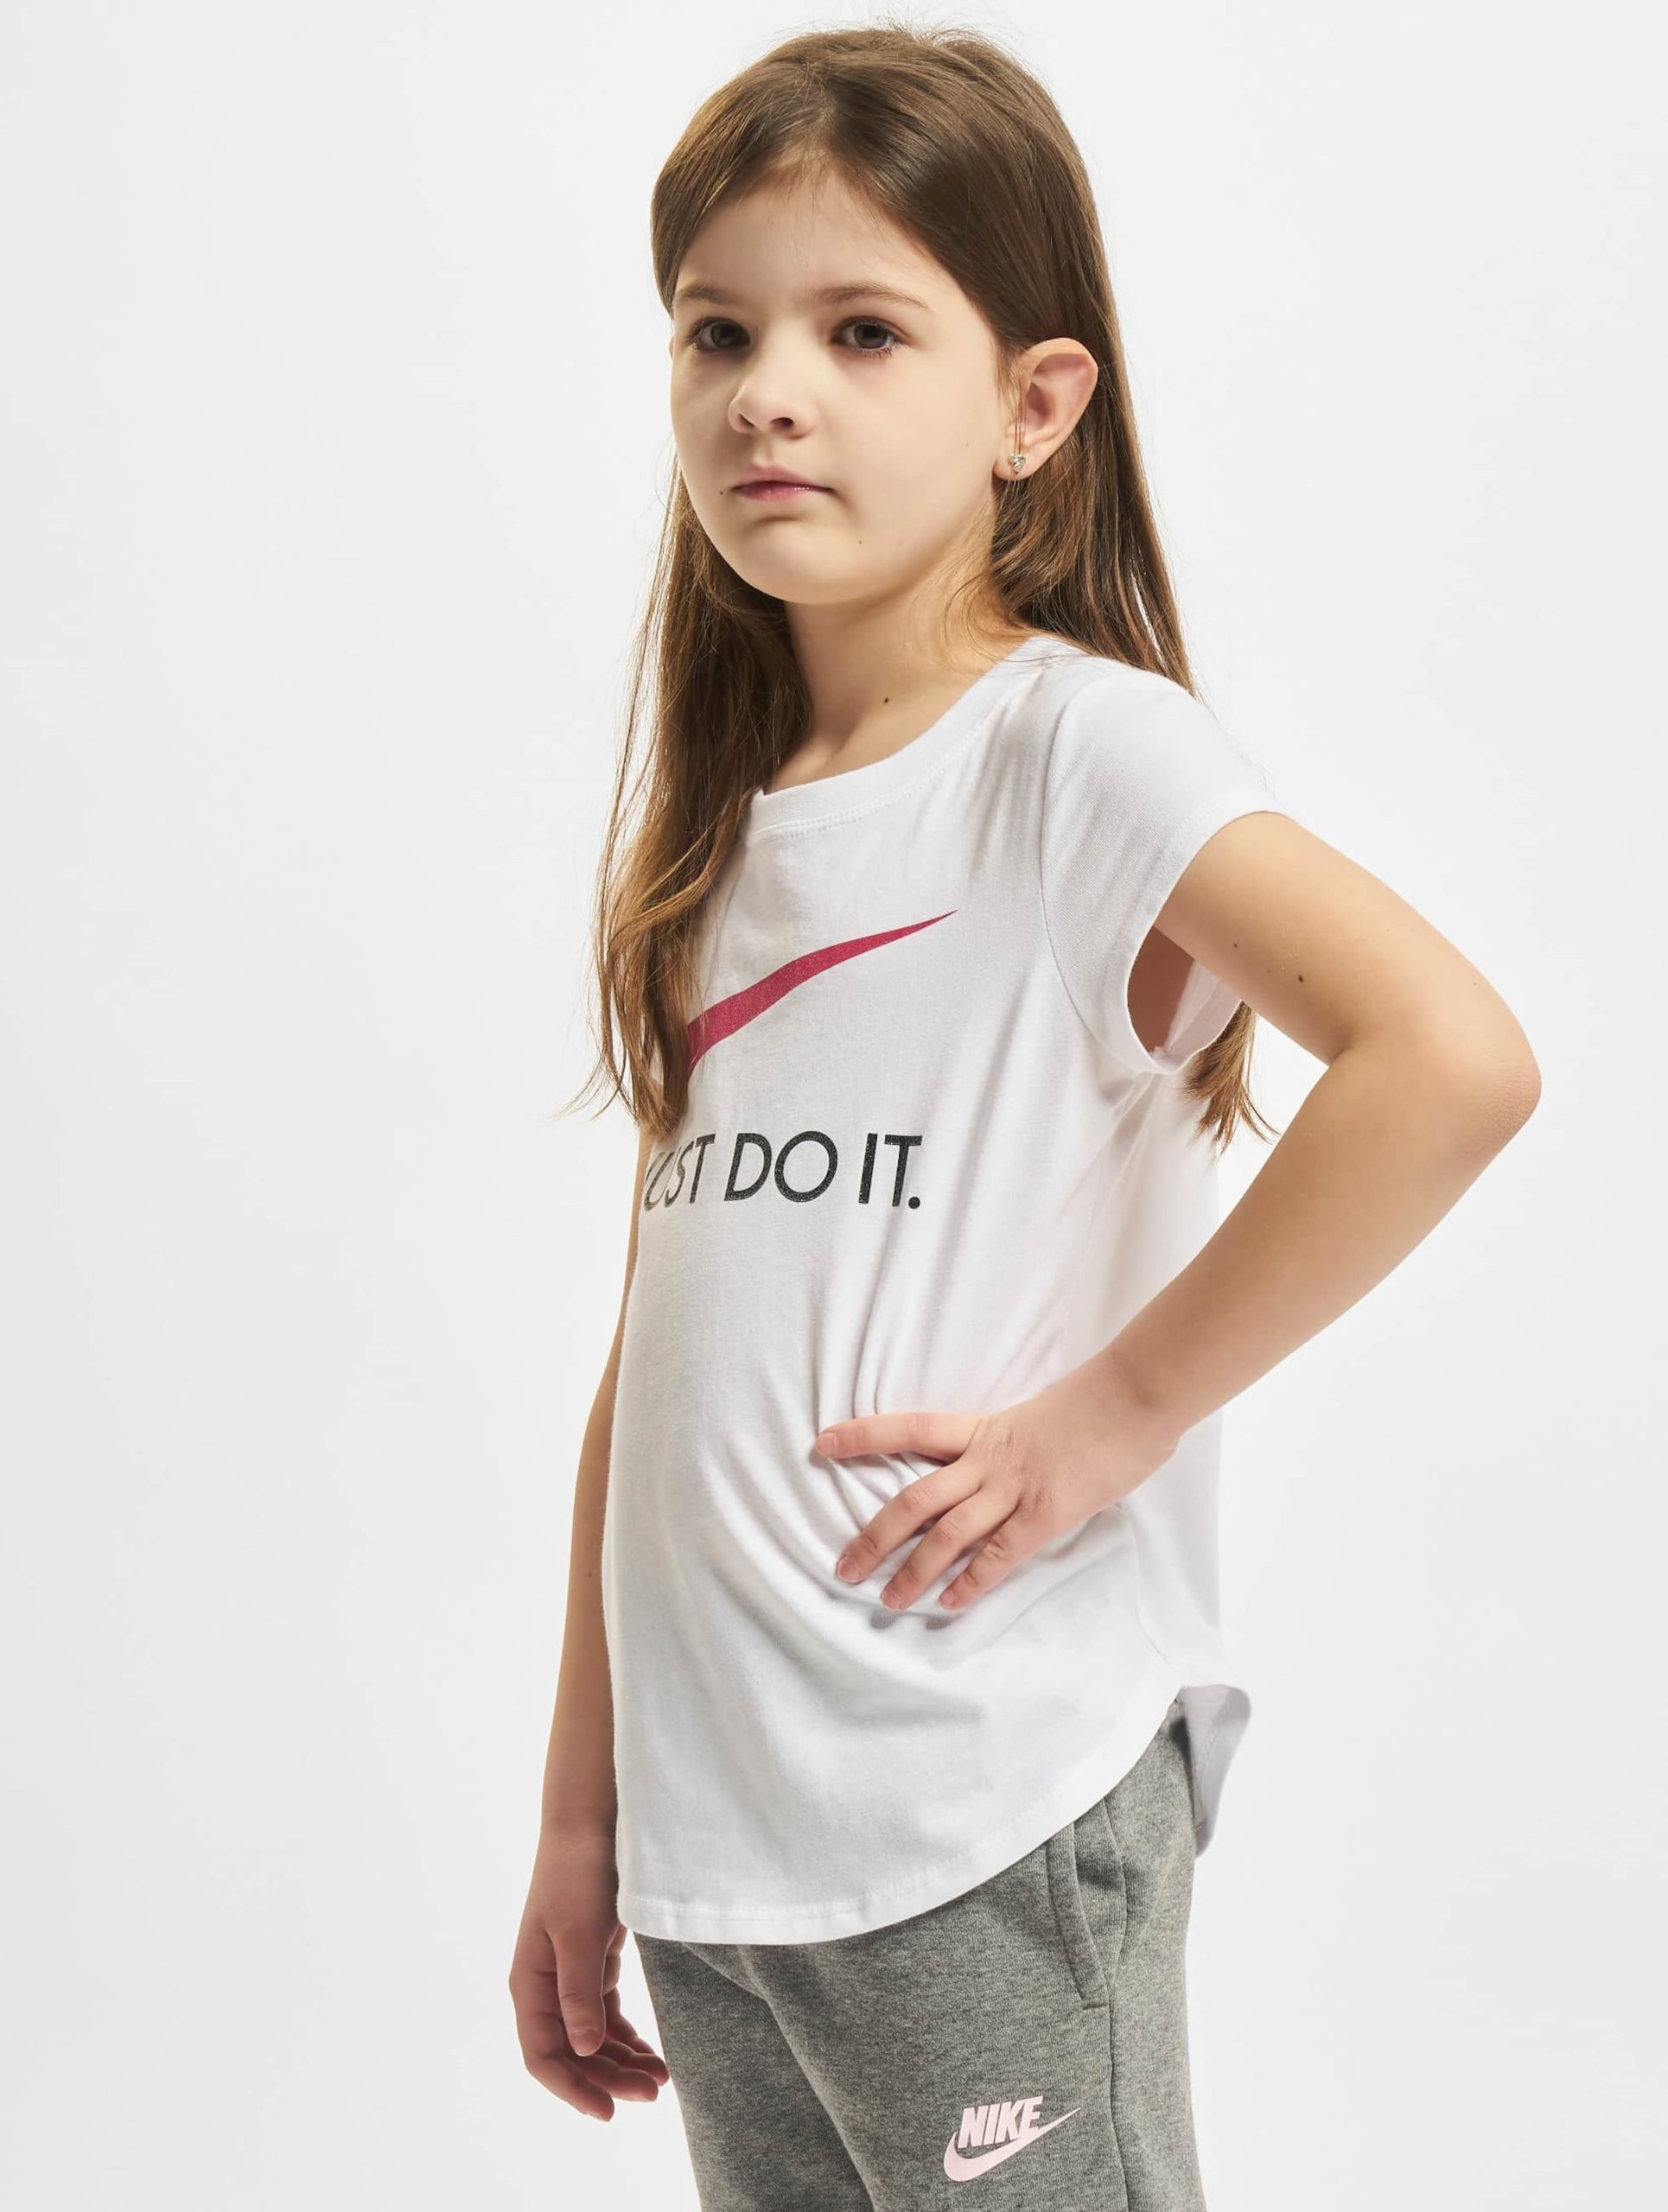 Nike Swoosh JDI T-Shirt Kinder,Unisex op kleur wit, Maat 45_YEARS